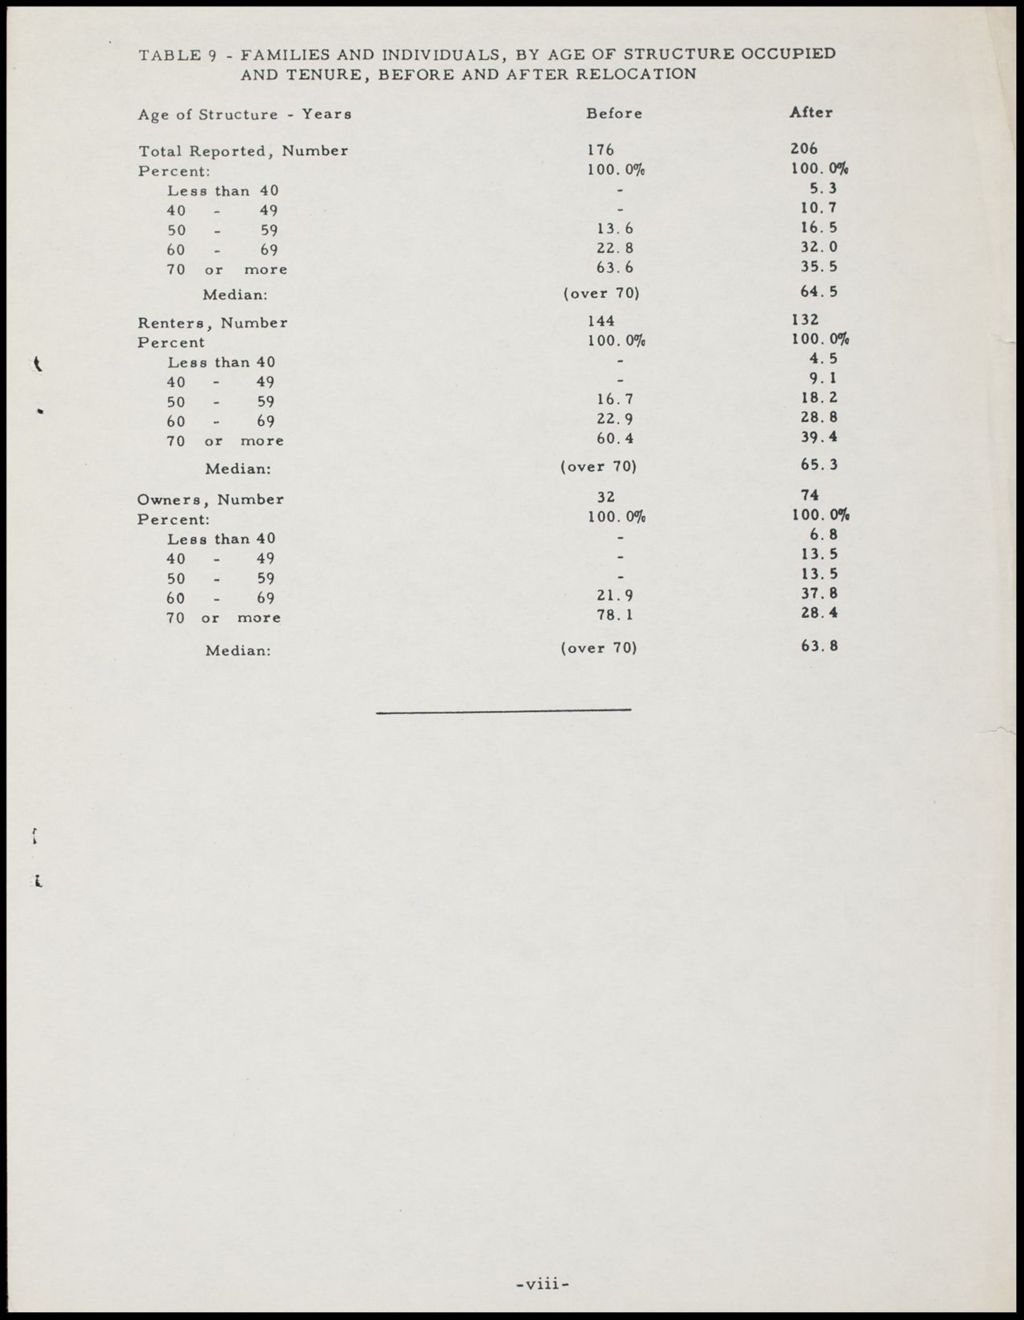 CHA Annual Report, 1973 (Folder III-346)